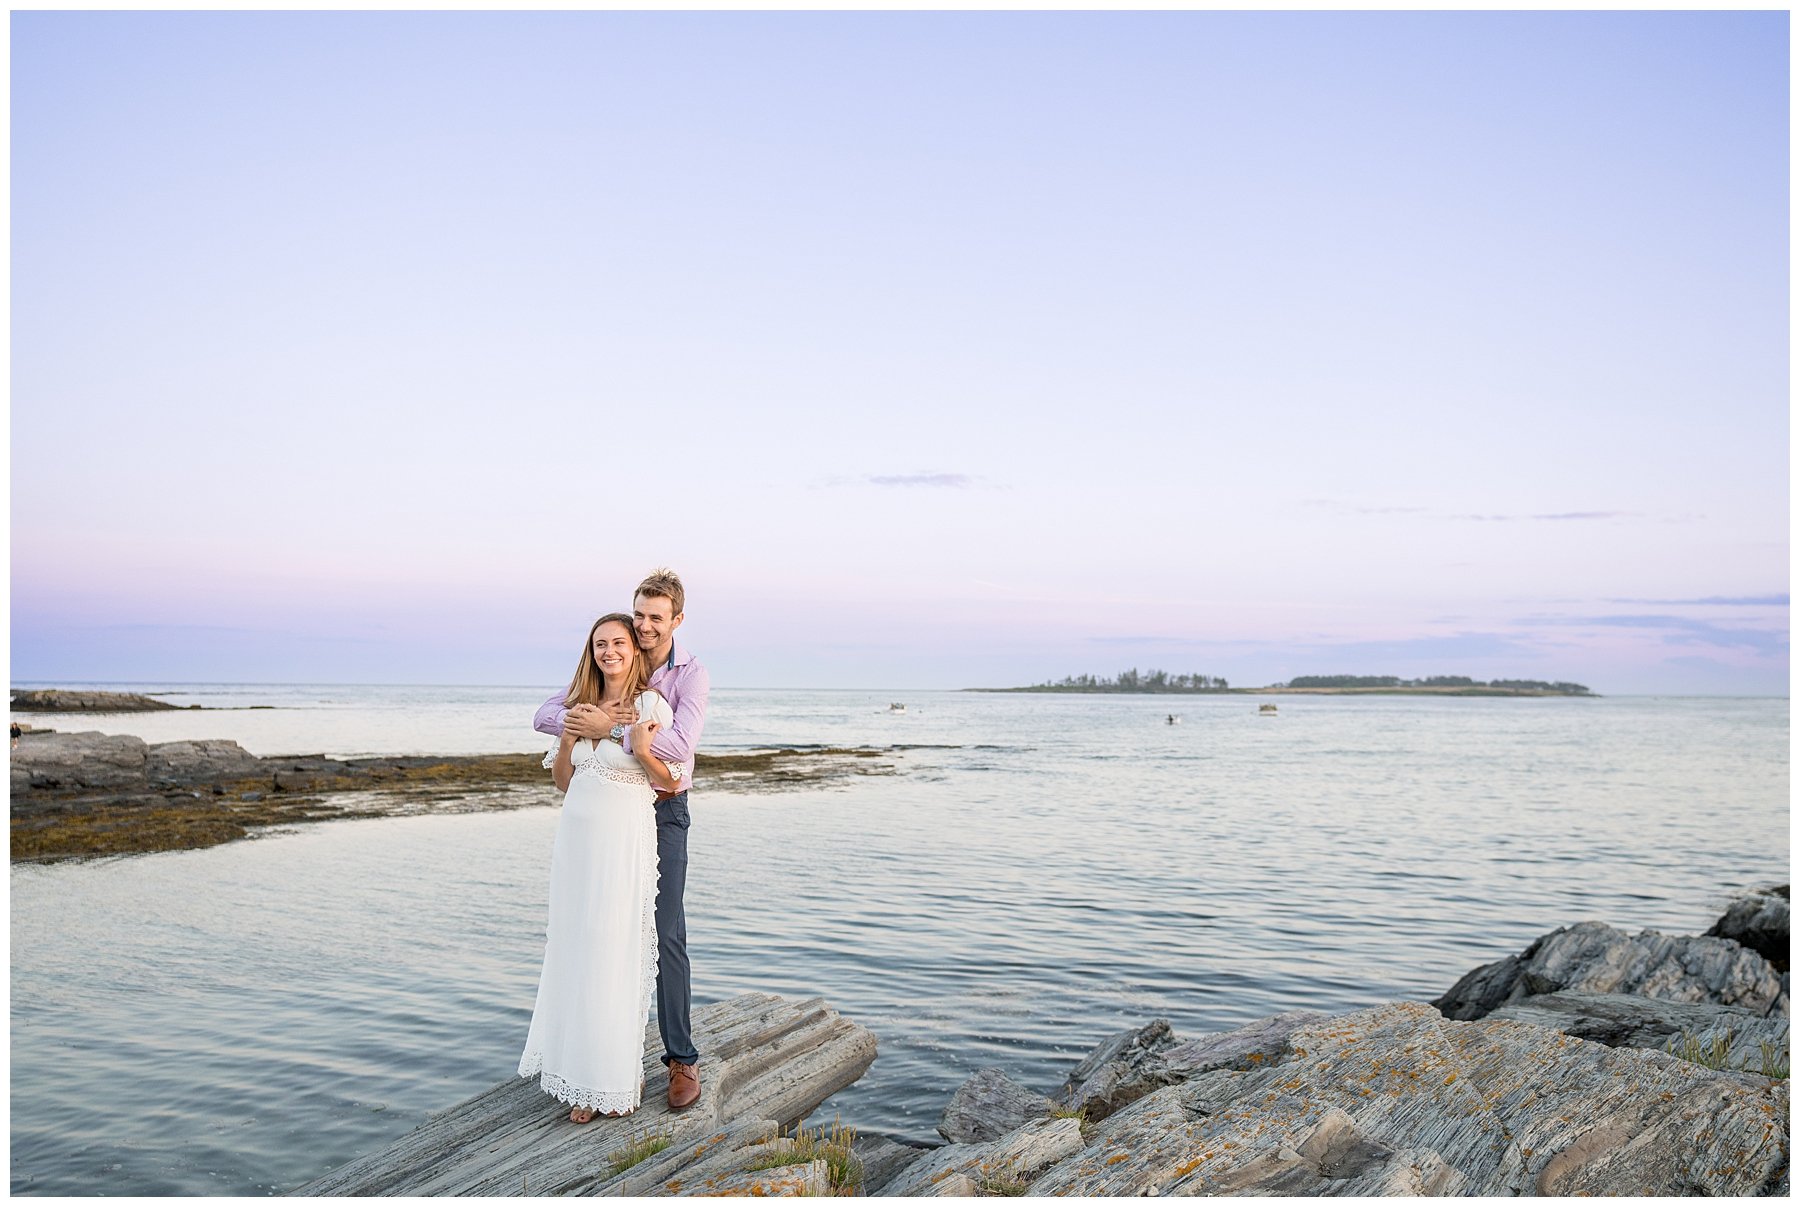 Kettle Cove Beach Wedding Photographer, Cape Elizabeth Wedding Photographer, Two Adventurous Souls- 070722_0017.jpg